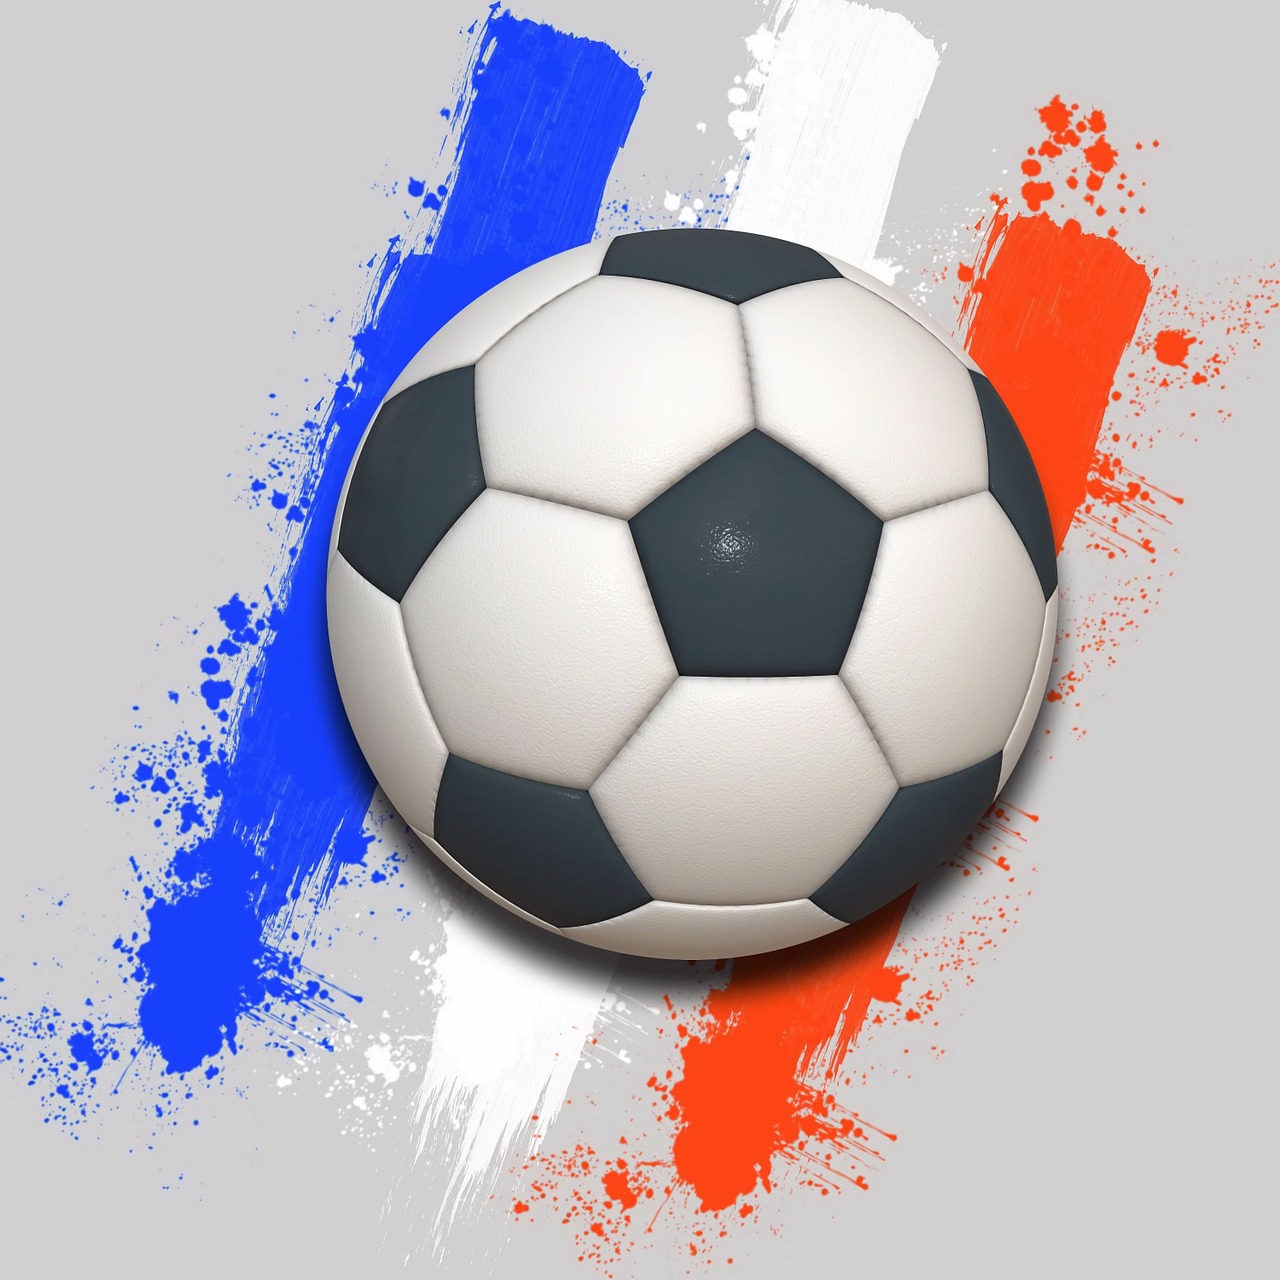 Europos Čempionatas, Futbolas, France, Rutulys, Apie, Raudona, Balta, Mėlynas, Futbolo Rungtynės, Em